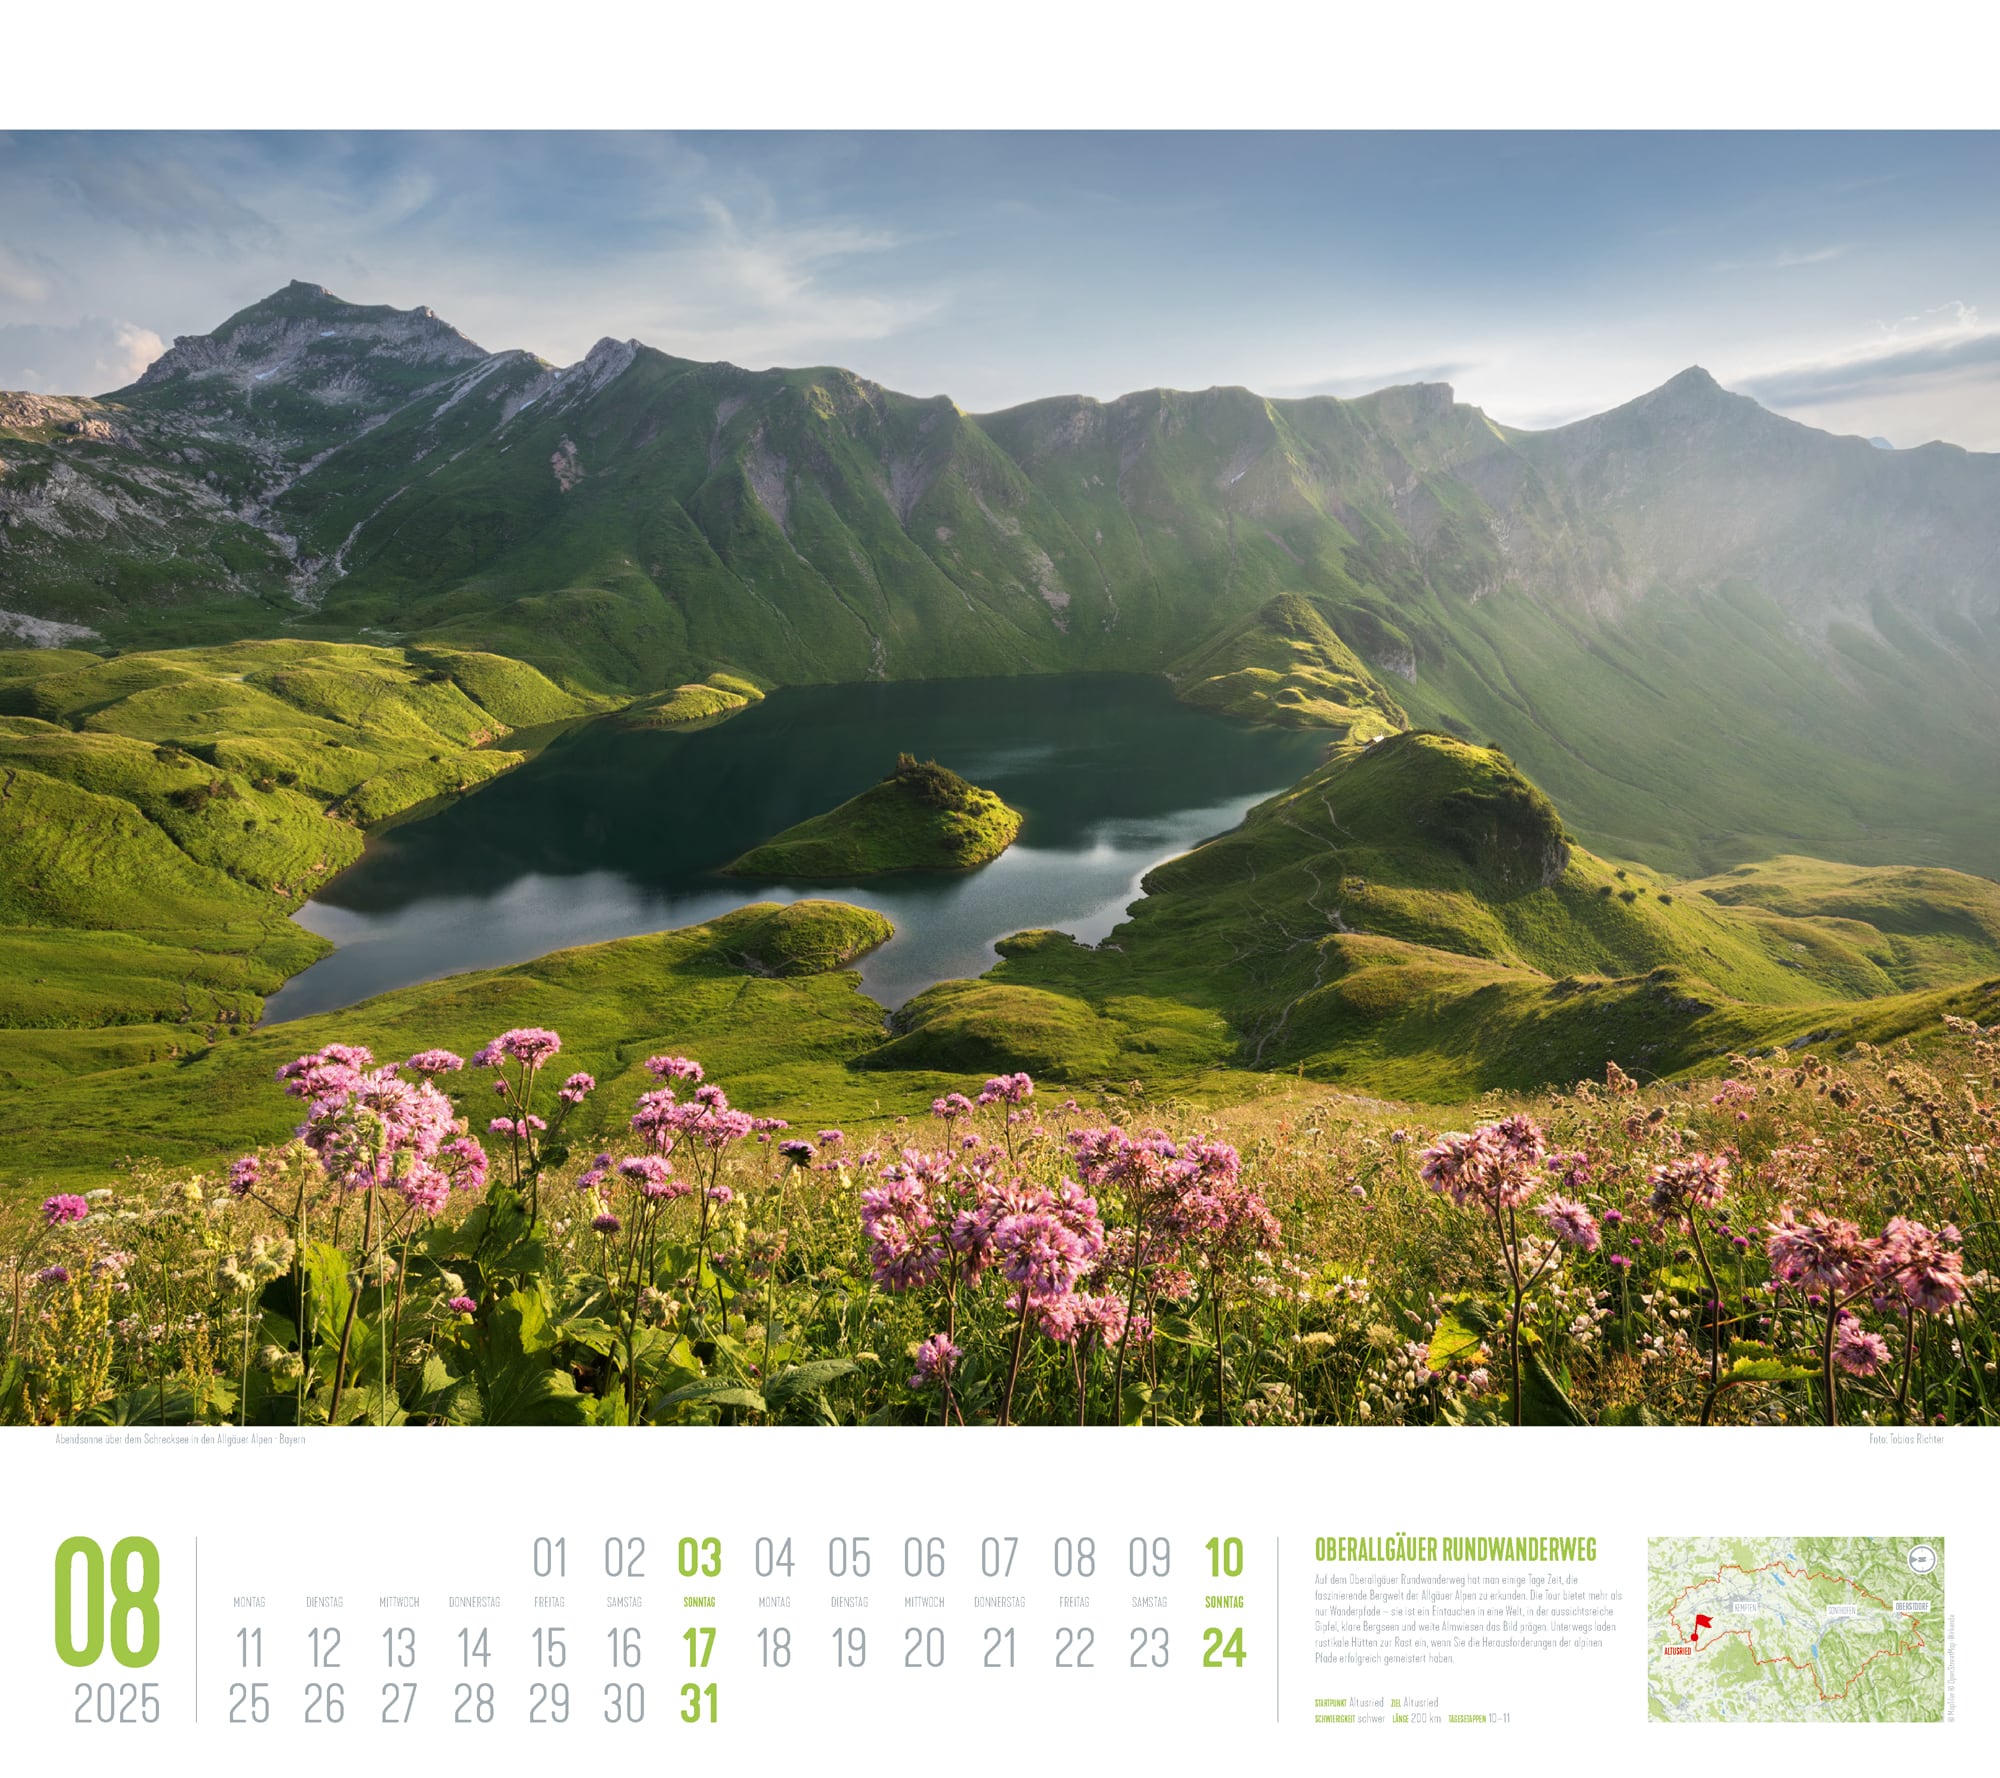 Ackermann Calendar Hiking Trails of Germany 2025 - Inside View 08